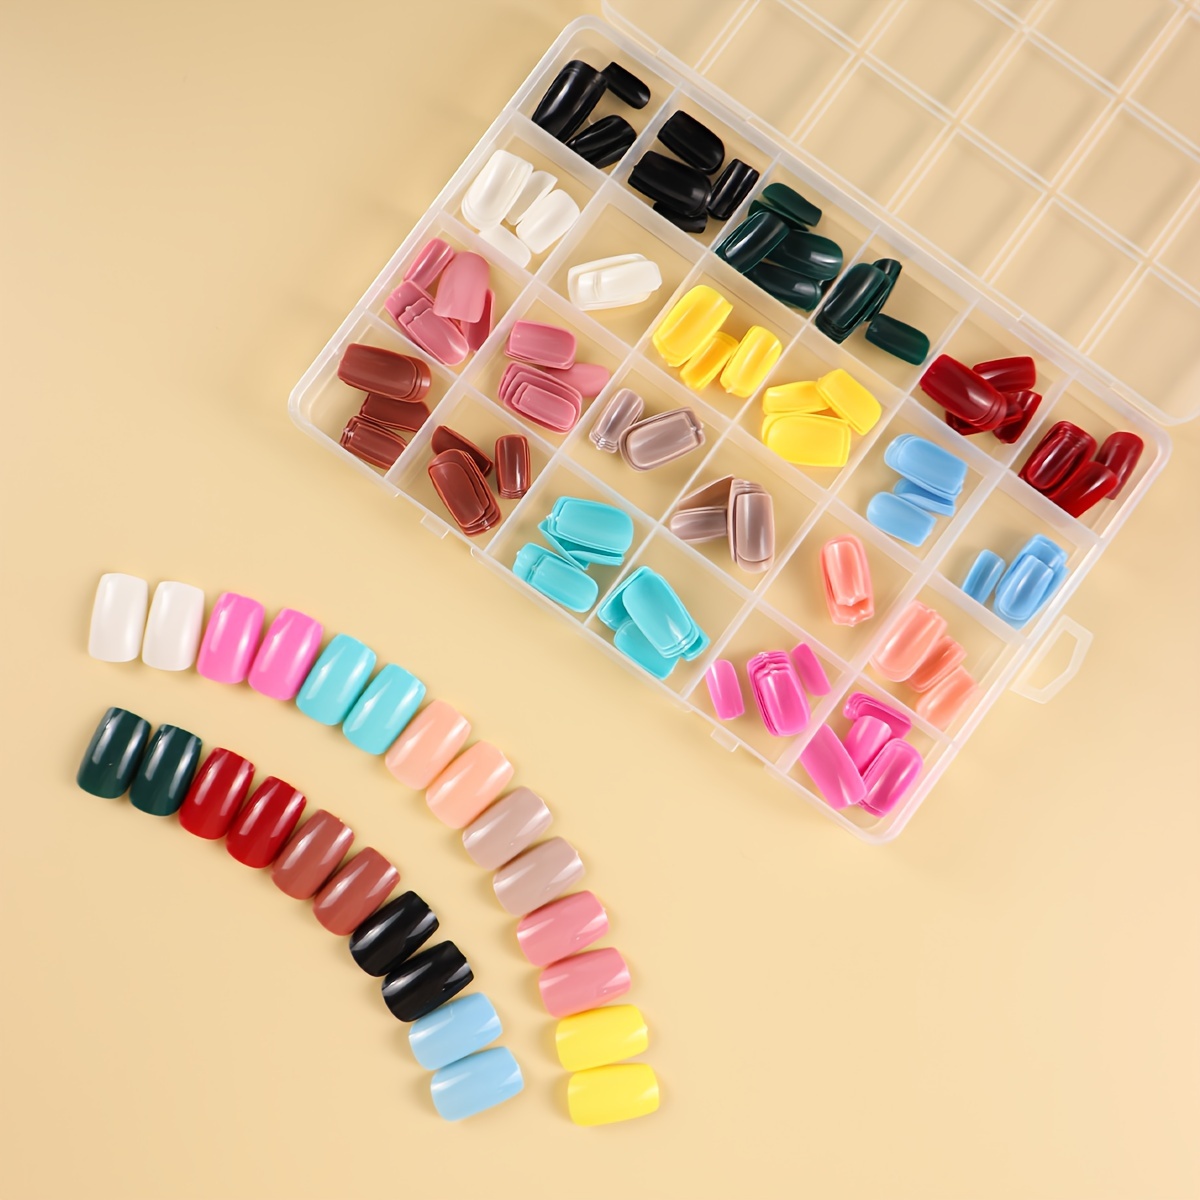 

576pcs Short Square False Nails Kit, 12 Colors Glossy Solid Color, Artificial Fake Nail Set For Diy Nail Art, Women's Wearable Tips